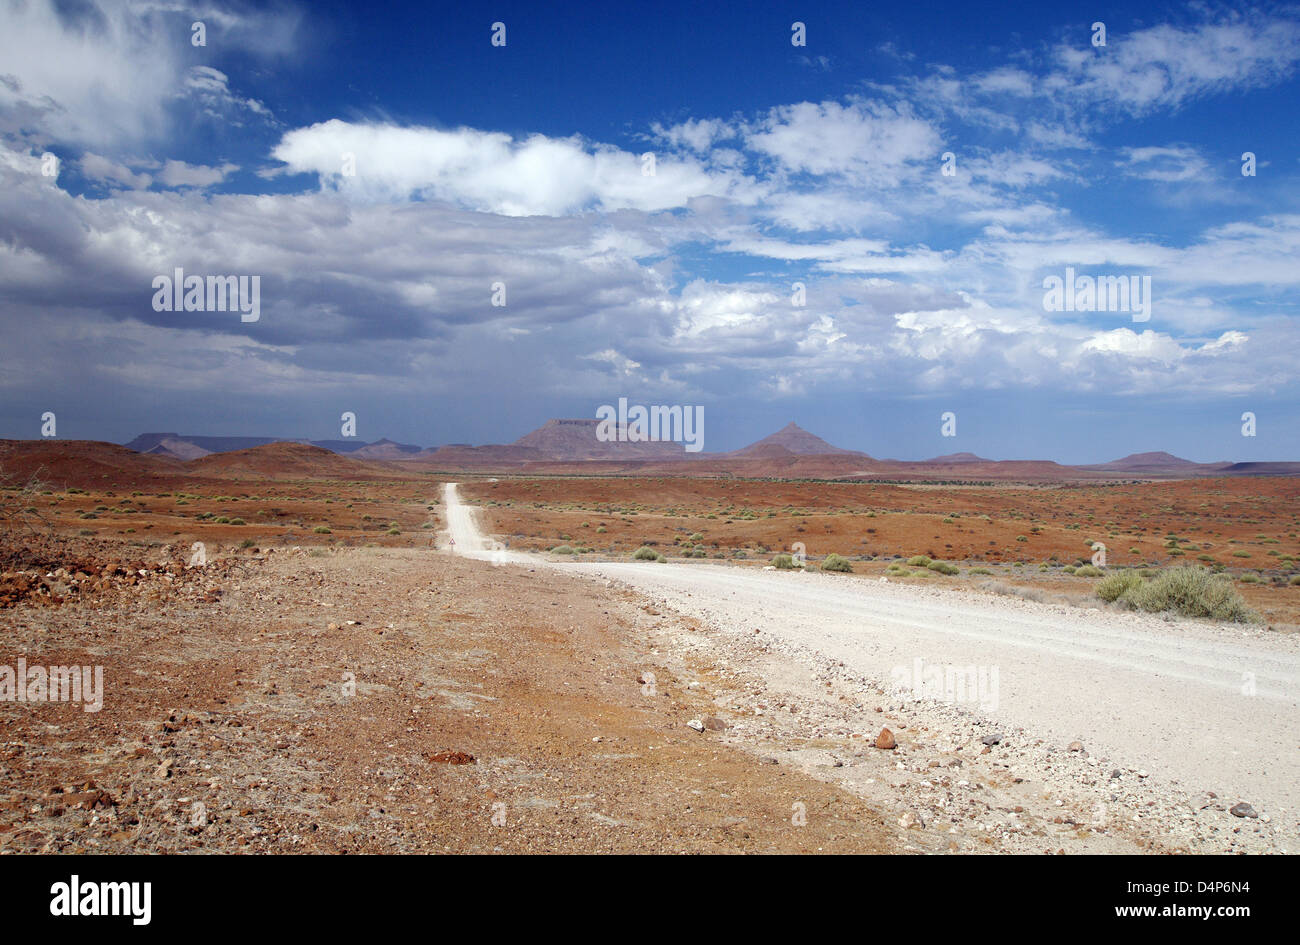 From Skeleton Coast to Damaraland: Table Mountains in Kunene Region, Namibia Stock Photo